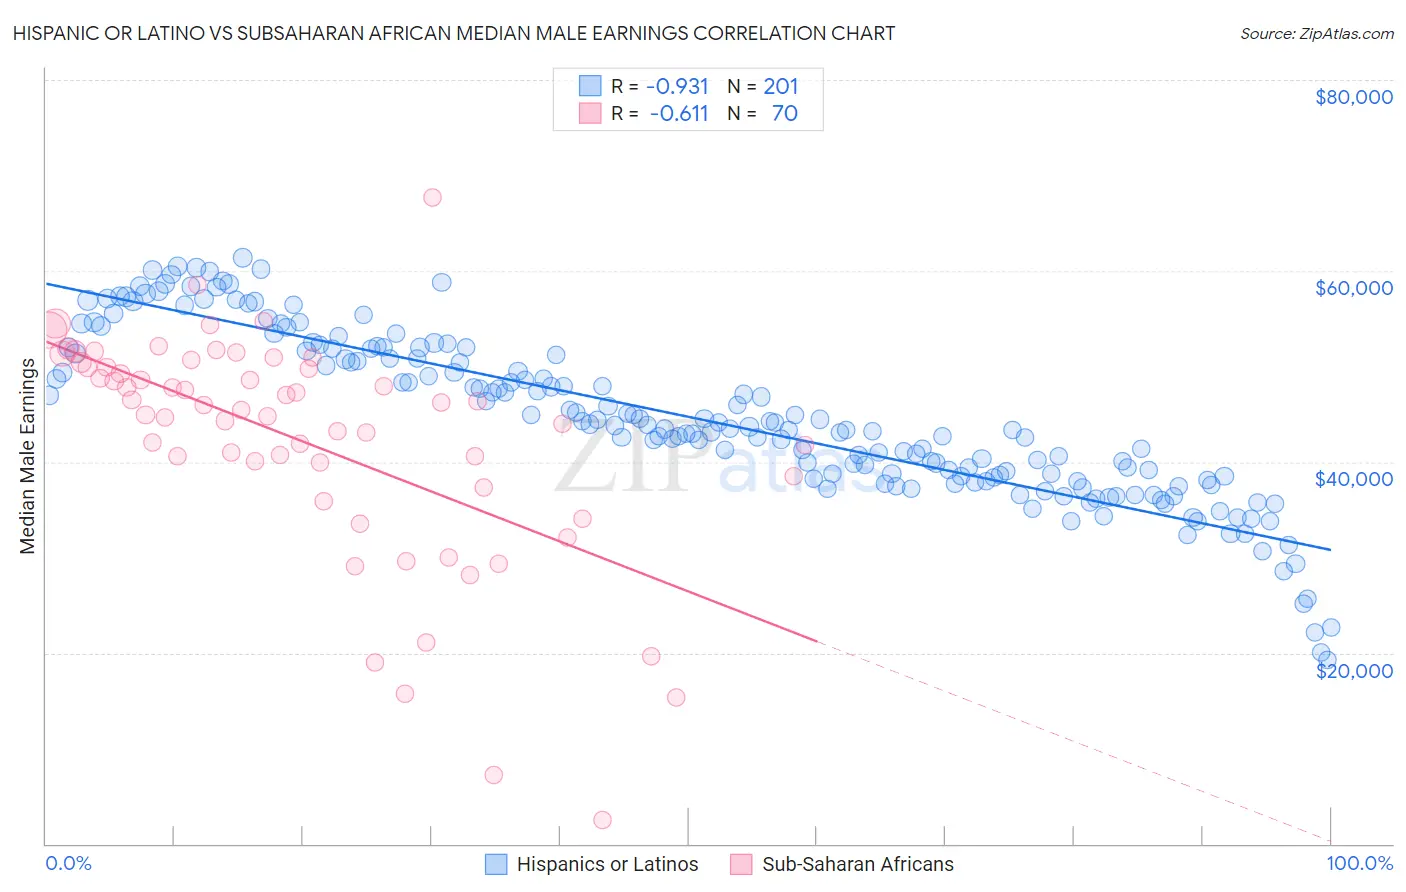 Hispanic or Latino vs Subsaharan African Median Male Earnings